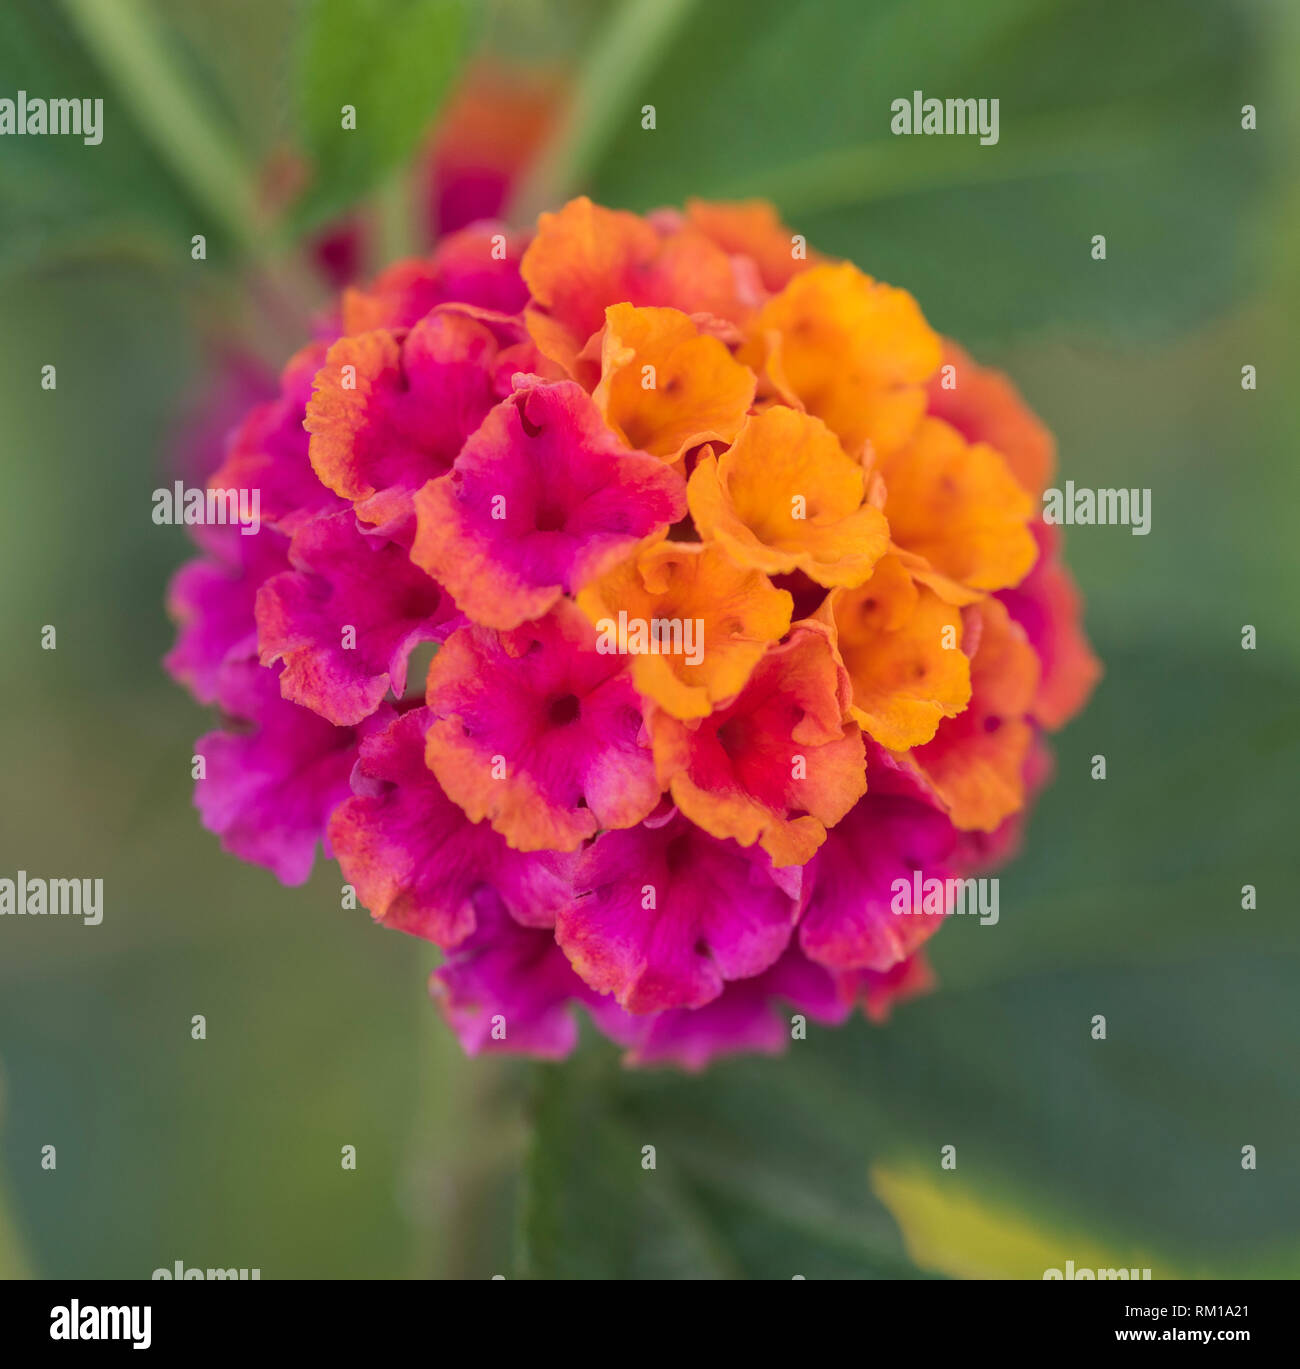 Close-up detail of a purple and orange rose lantana flower lantana camara in rural garden setting Stock Photo